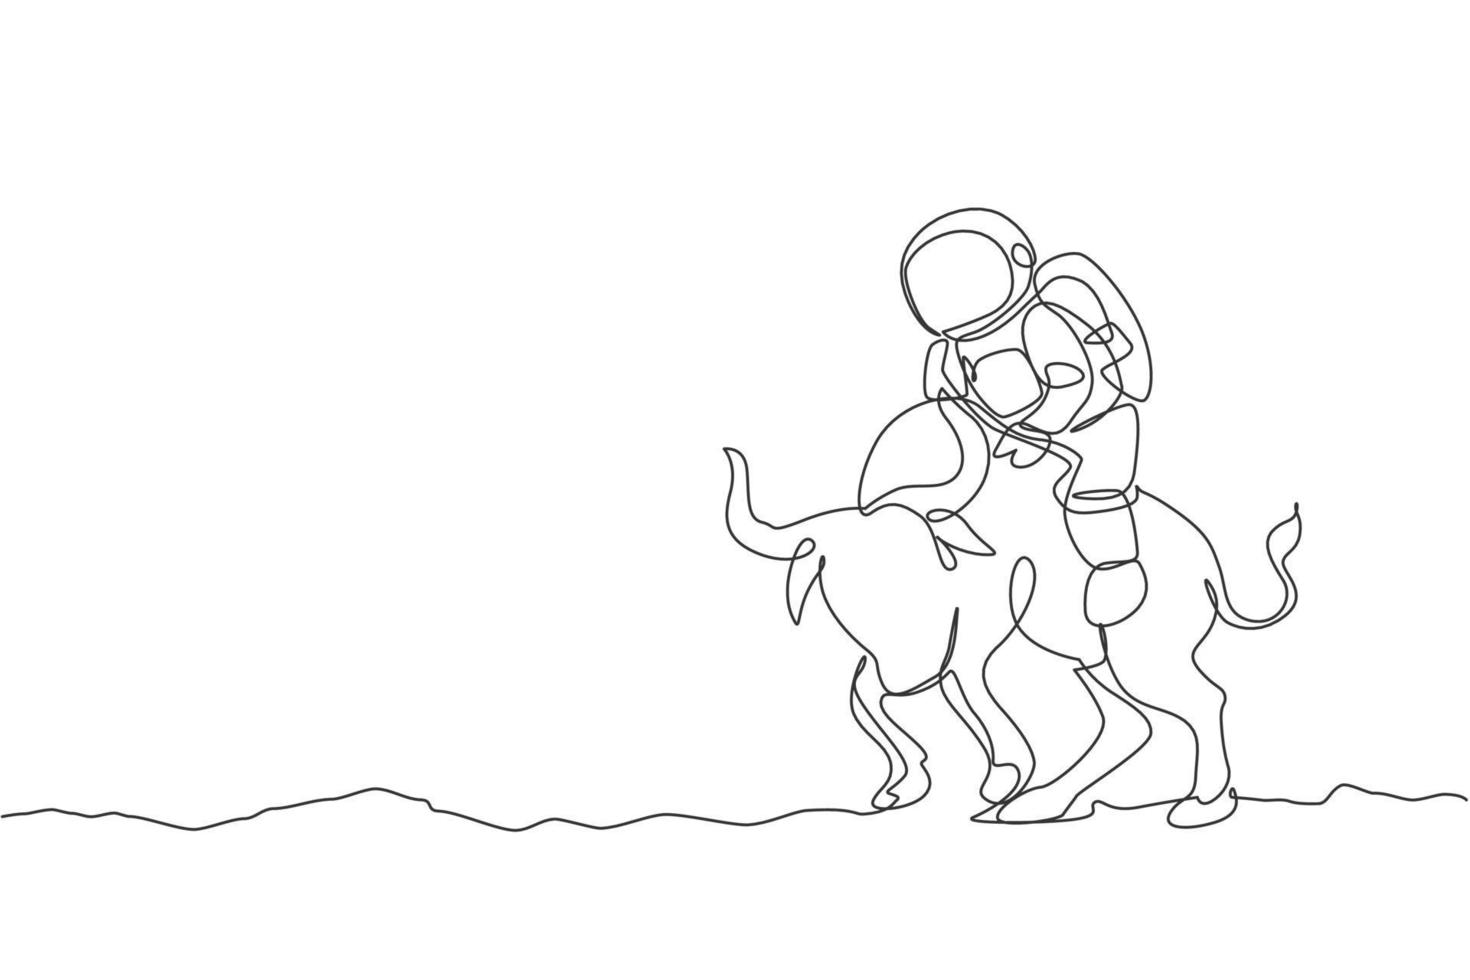 en kontinuerlig linjeteckning av rymdmannen tar en promenad på en arg tjur, vilda djur i månytan. djup rymd safari resa koncept. dynamisk enkel linje rita grafisk design vektor illustration